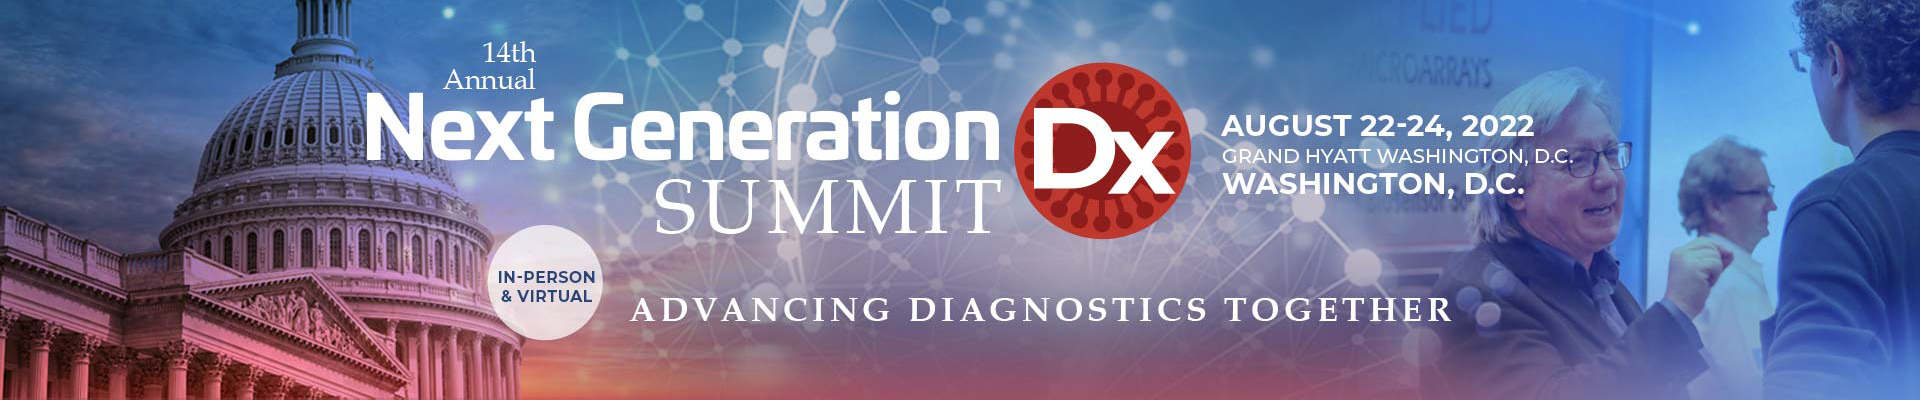 14th Annual 2022 Next Generation Dx Summit